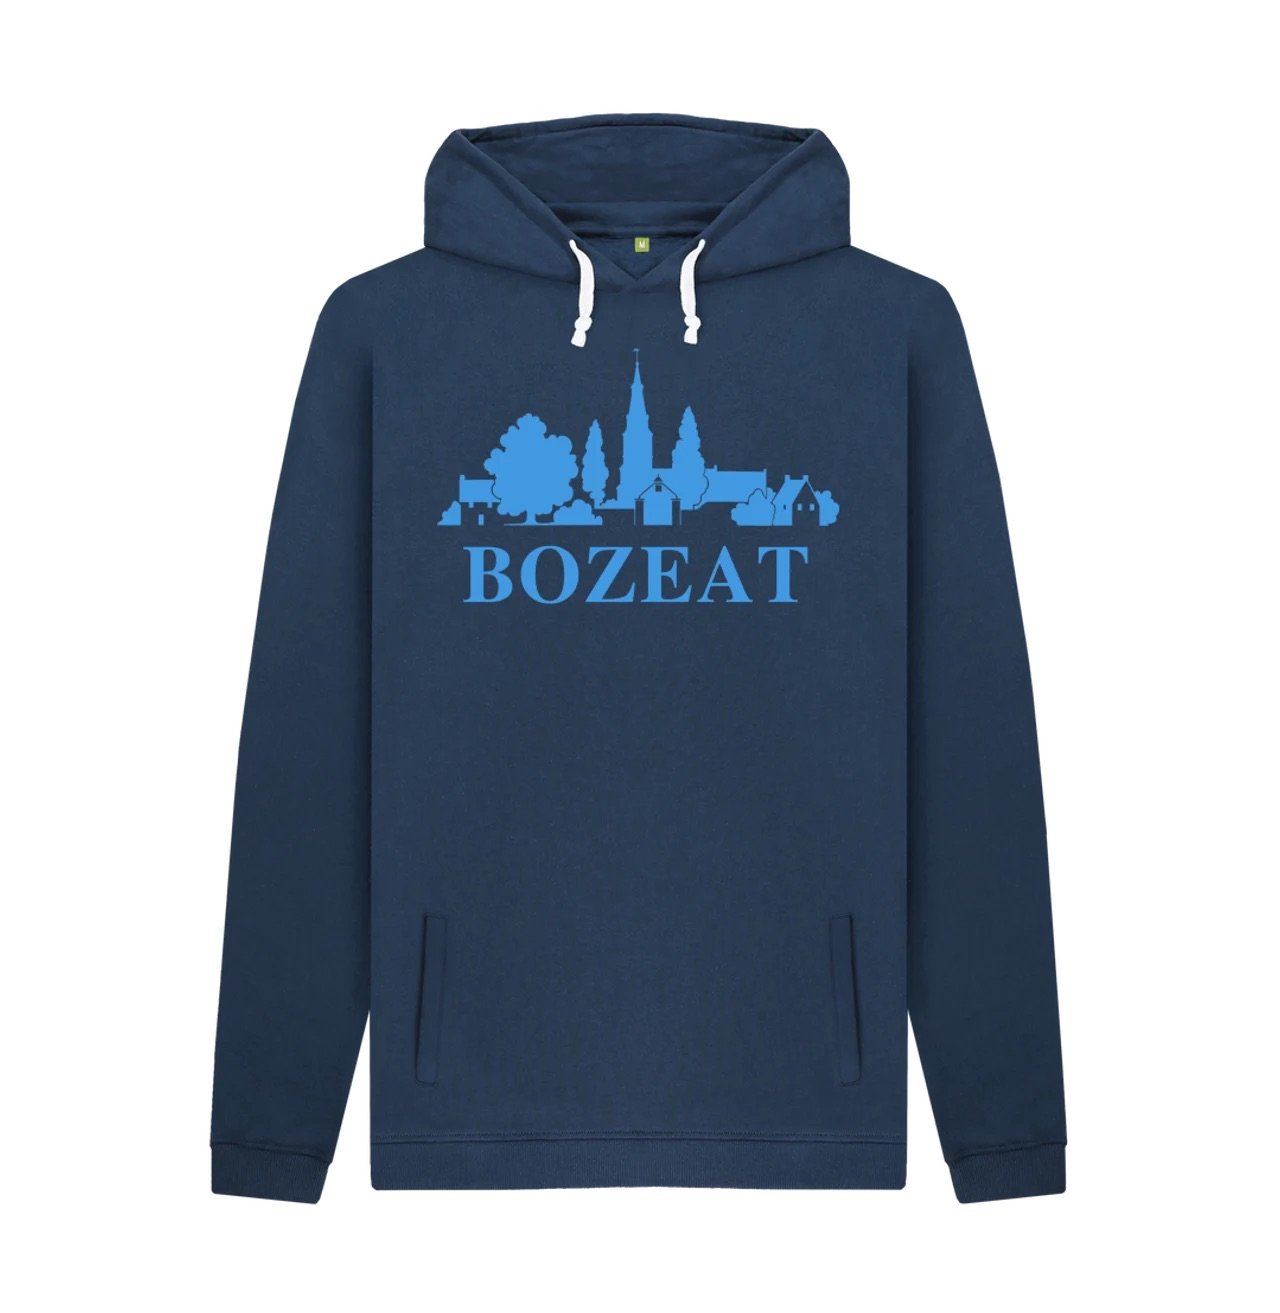 Bozeat merchandise navy hoodie.jpg